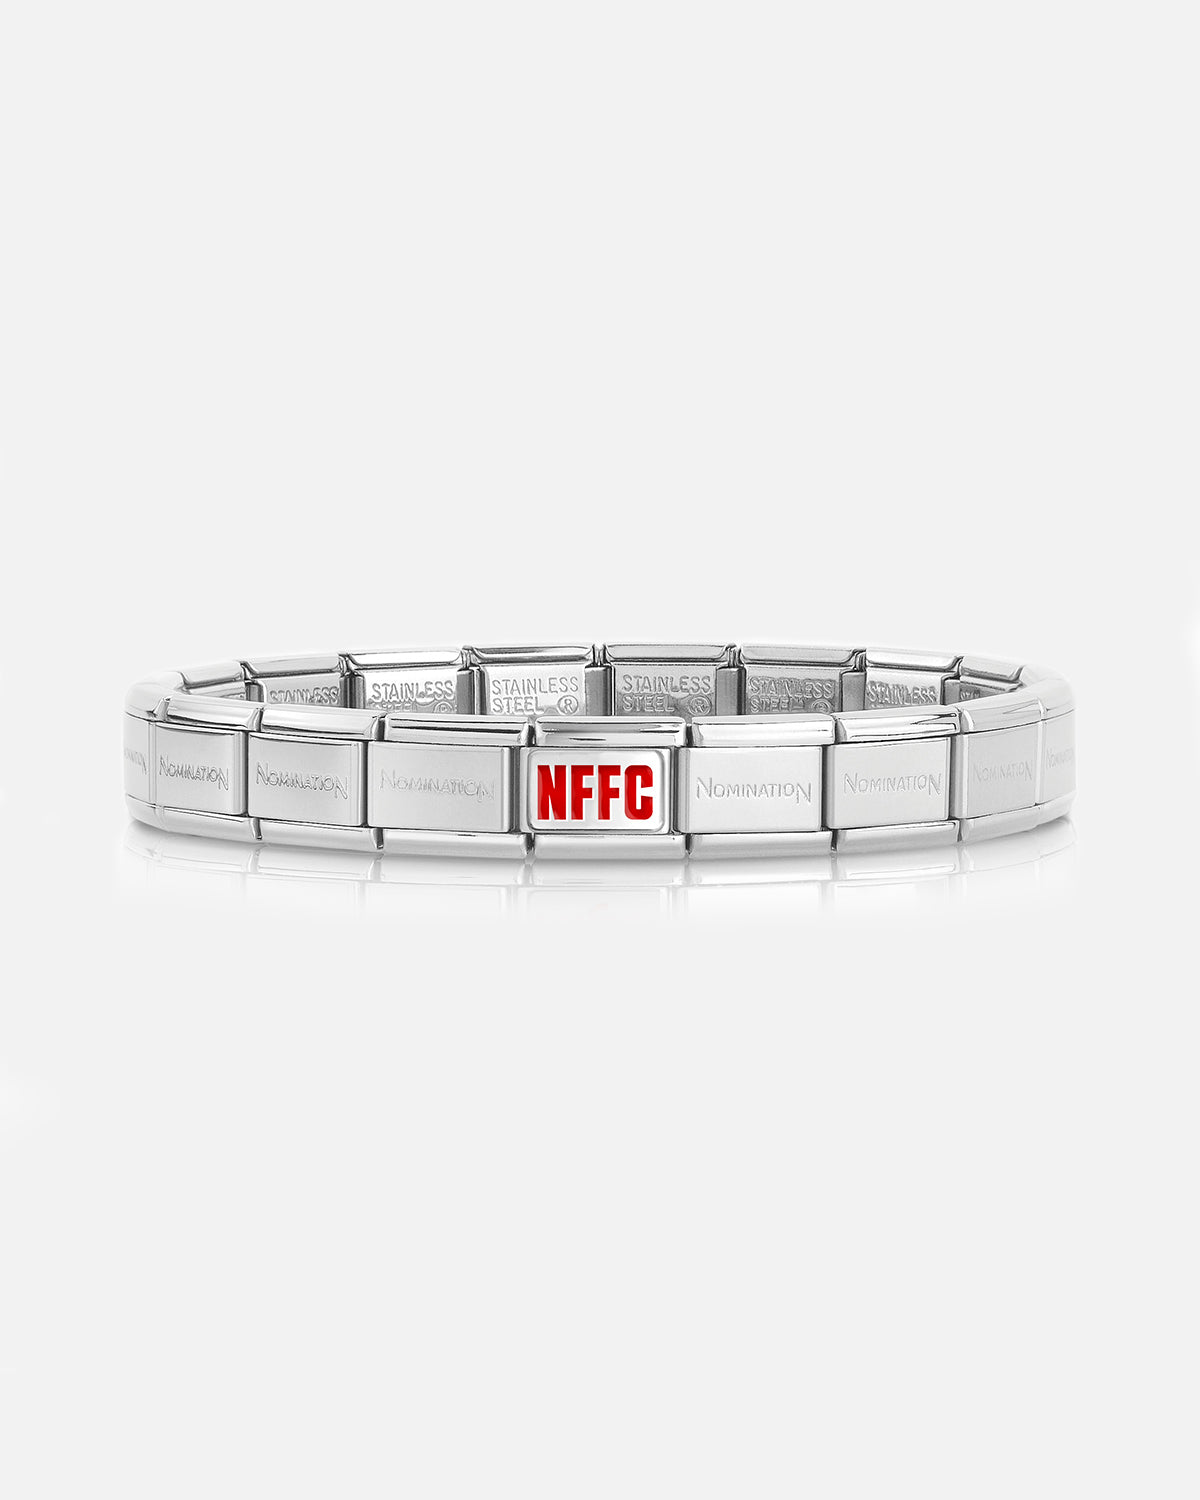 NFFC Nomination Initials Classic Bracelet - Nottingham Forest FC